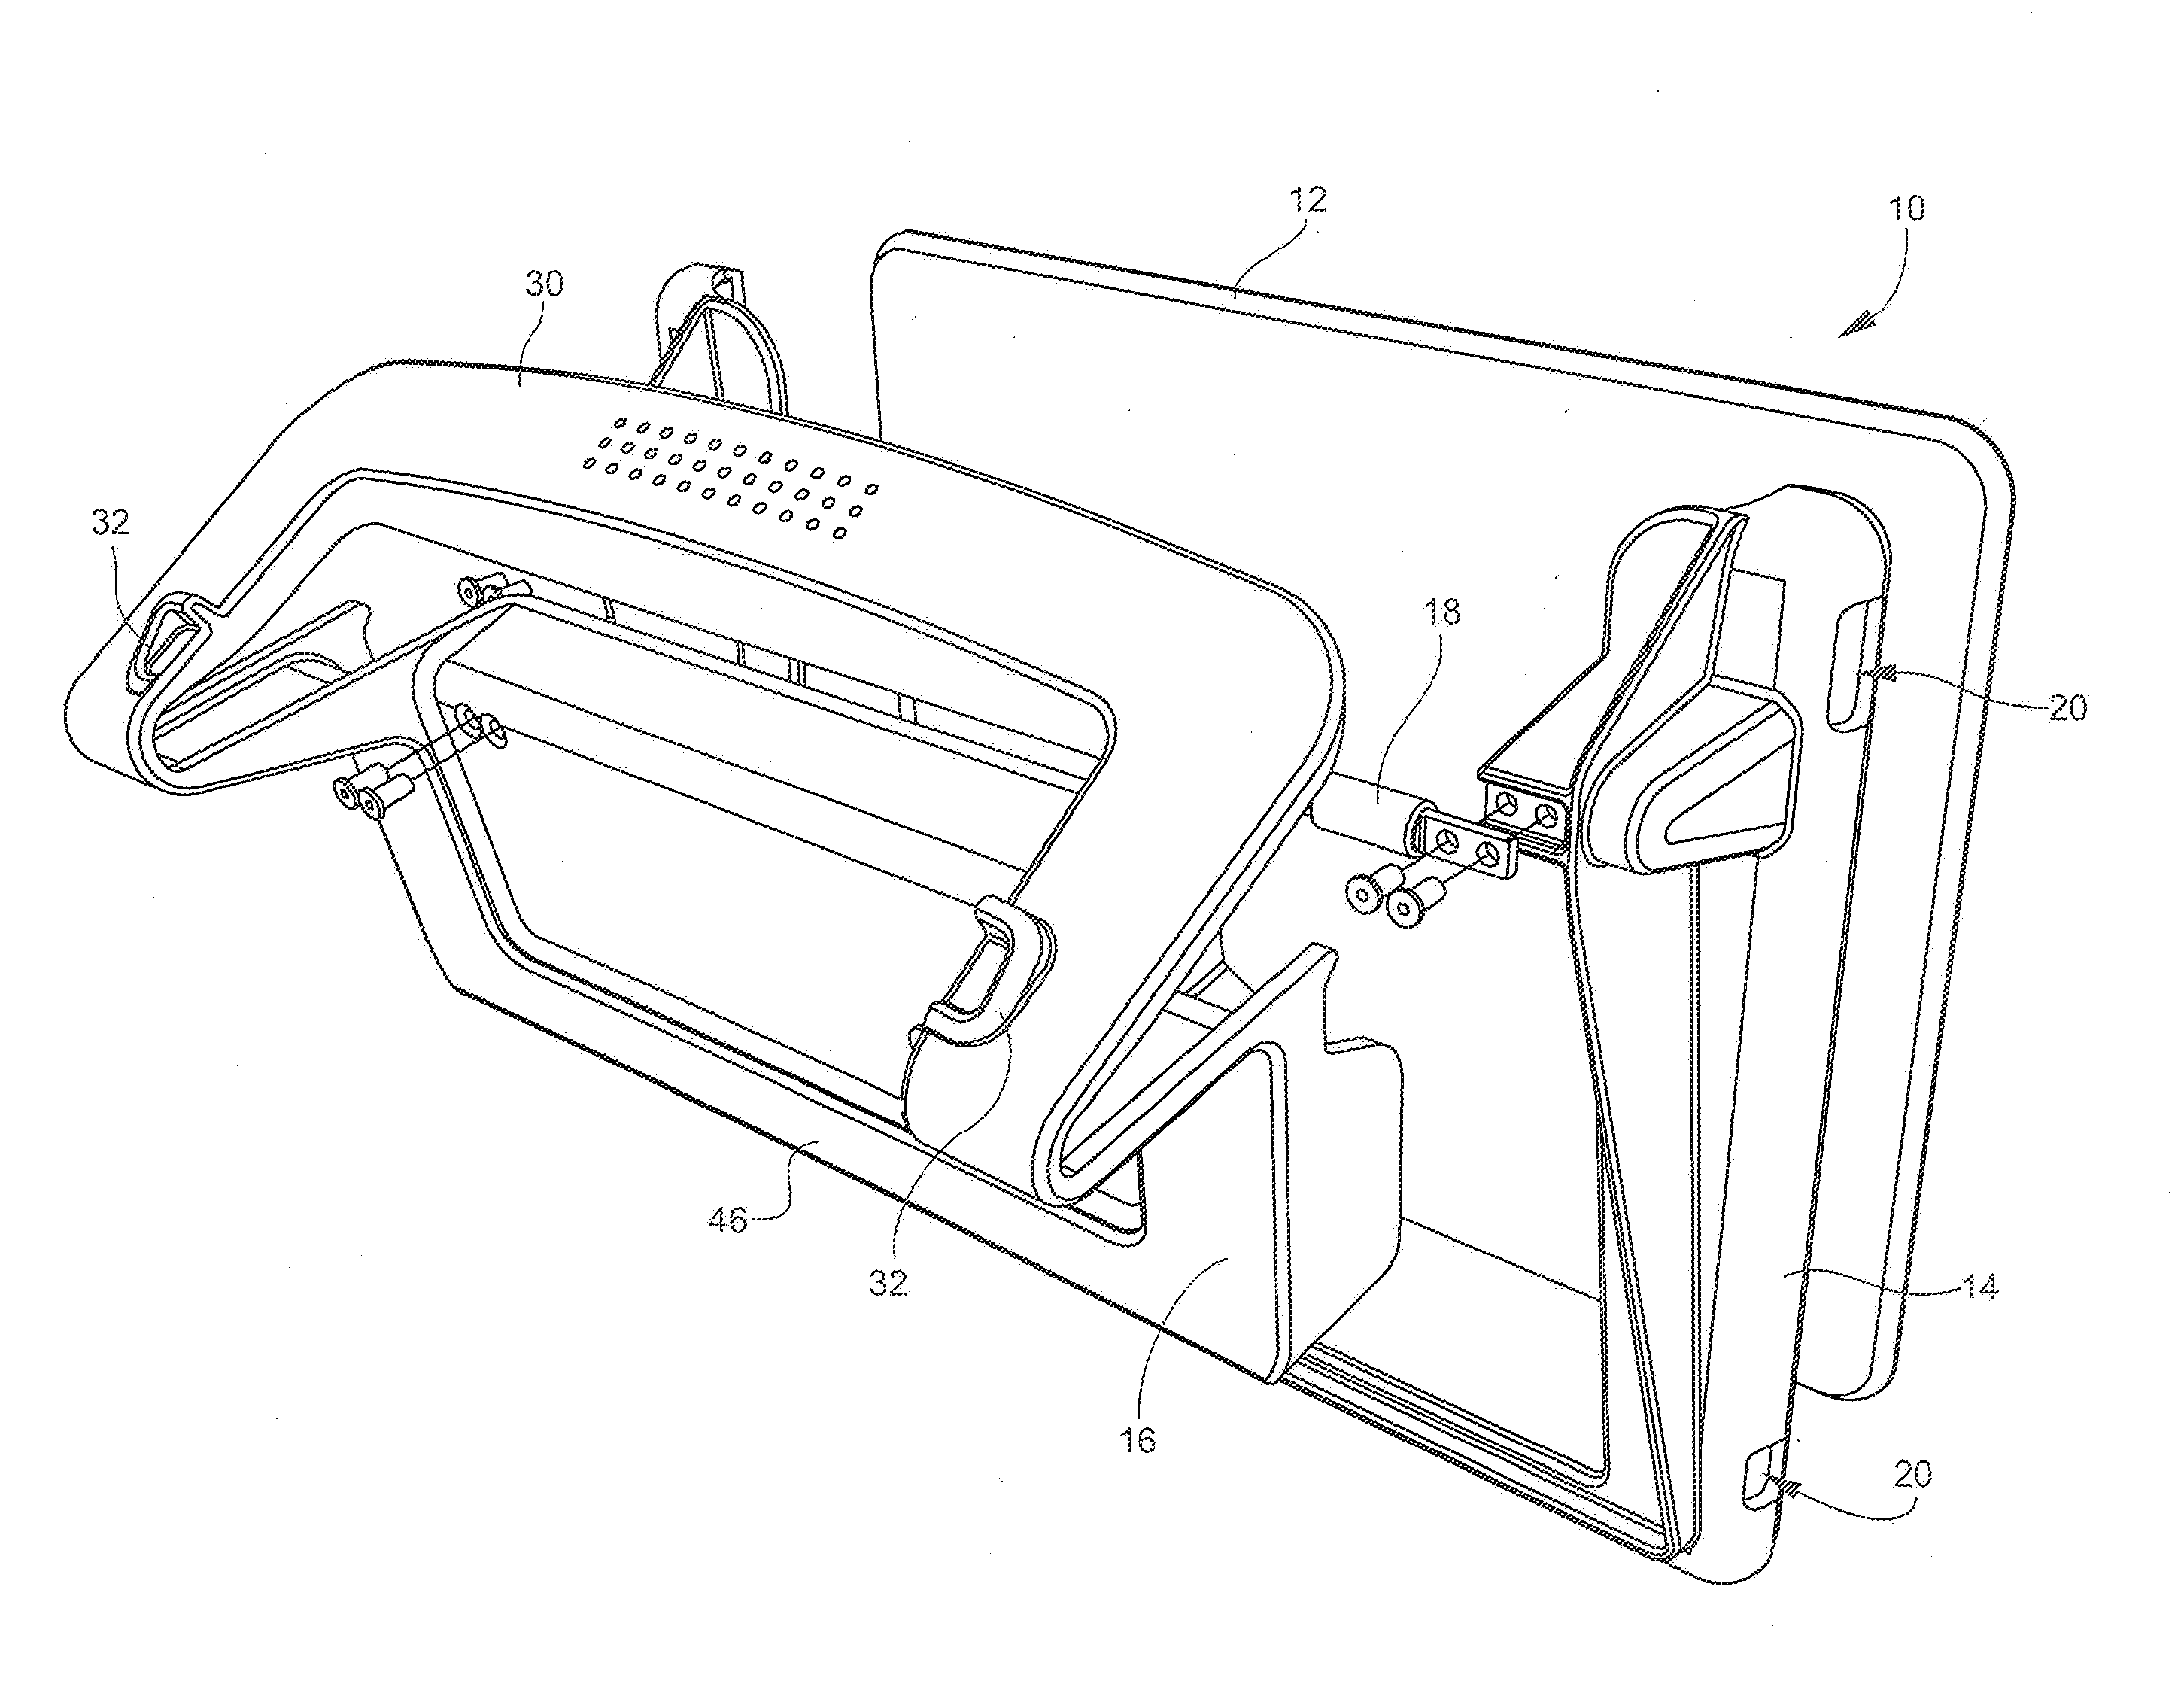 Seatback holder for tablet computers